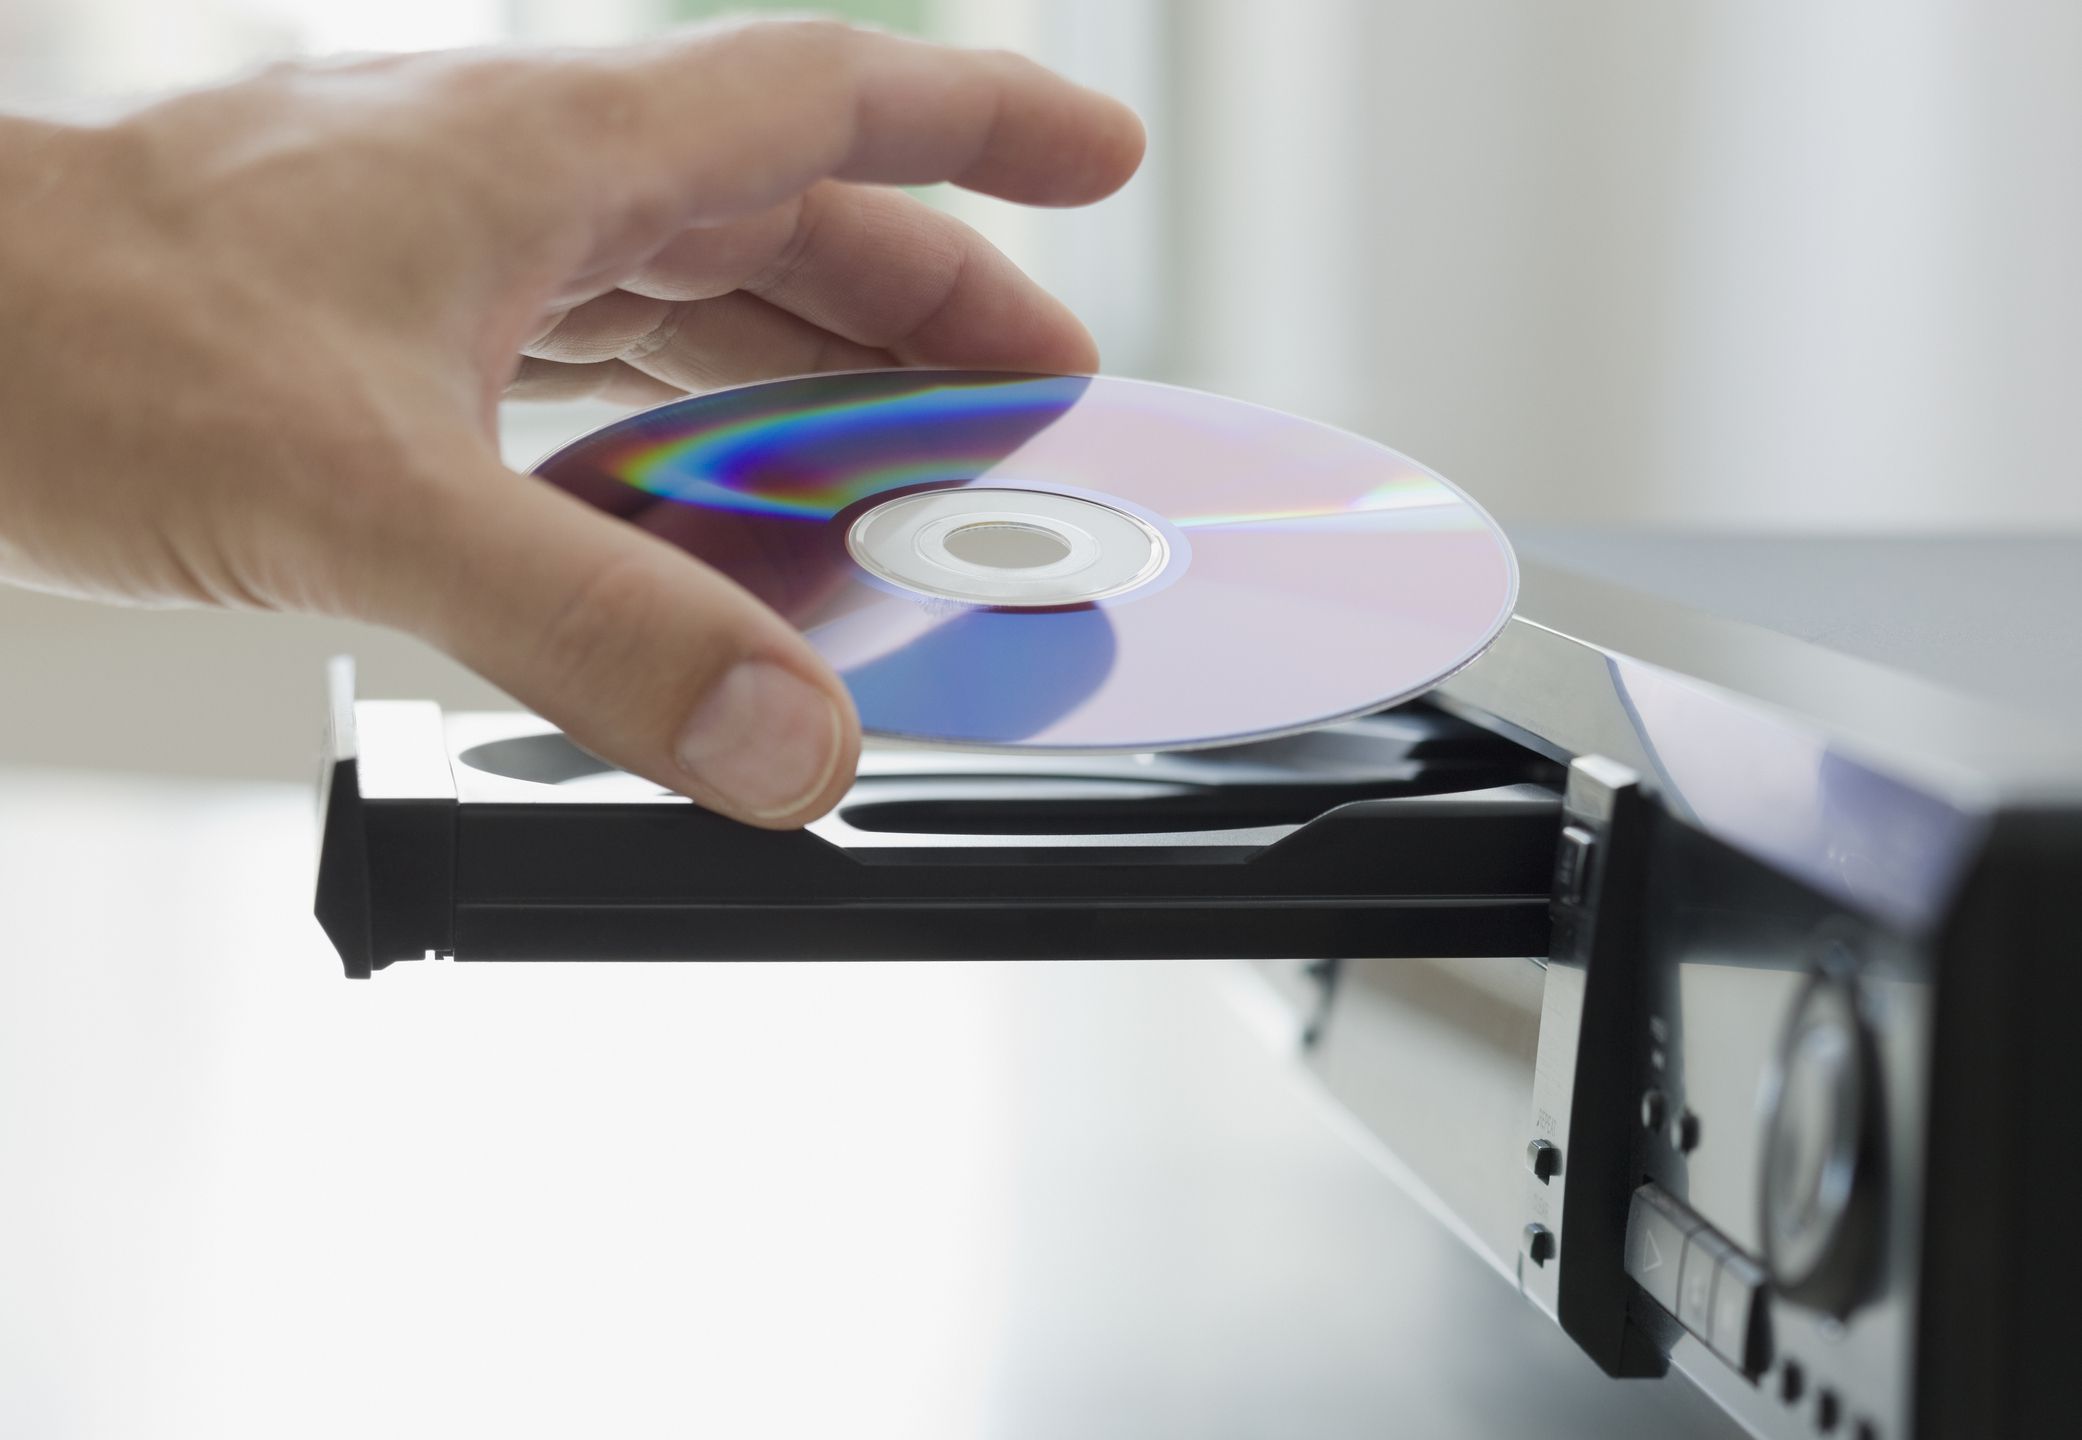 samsung dvd player software